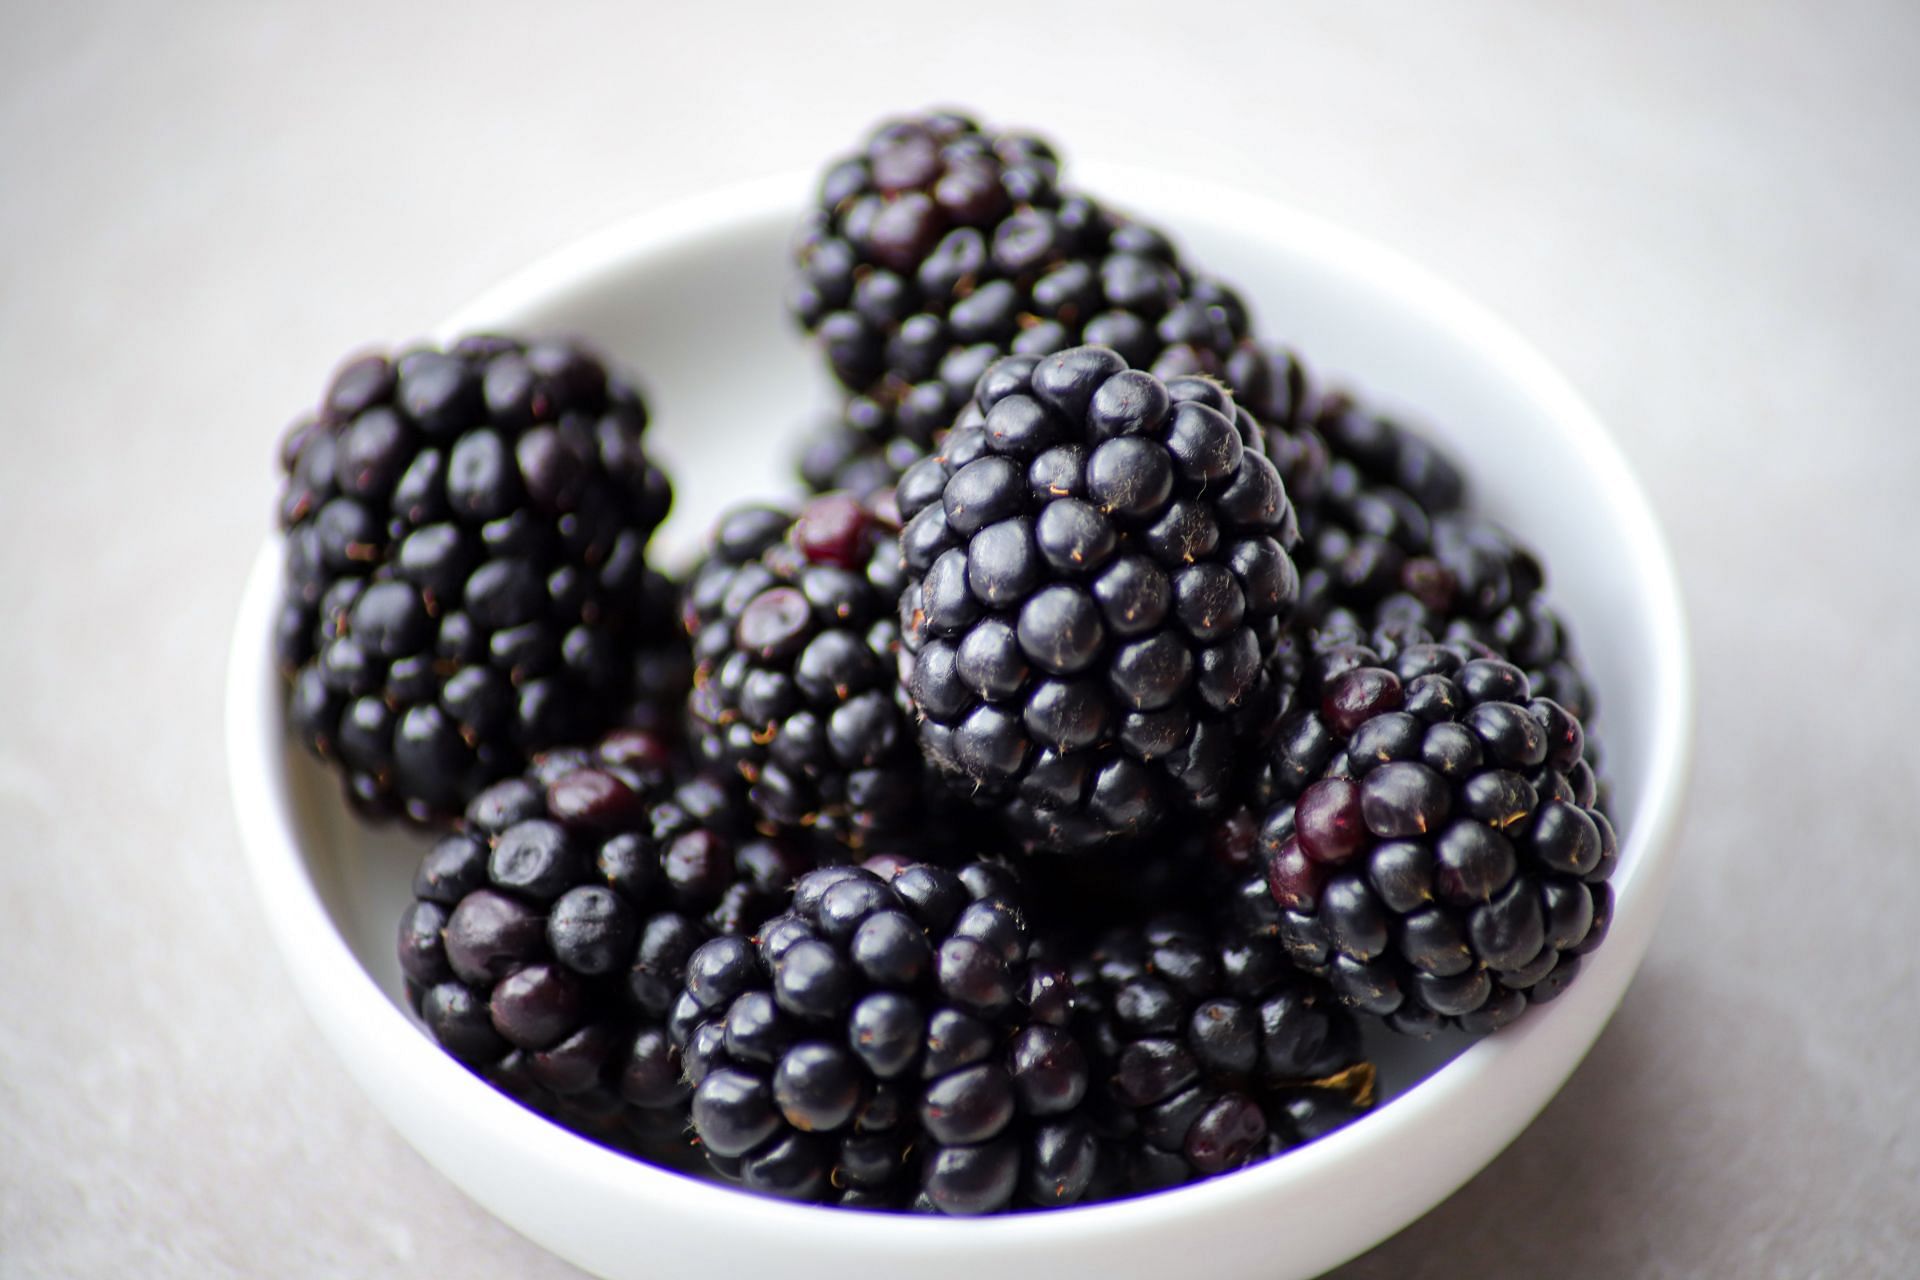 Here are the health benefits of blackberries! (Image via unsplash/Yulia Khlebnikova)